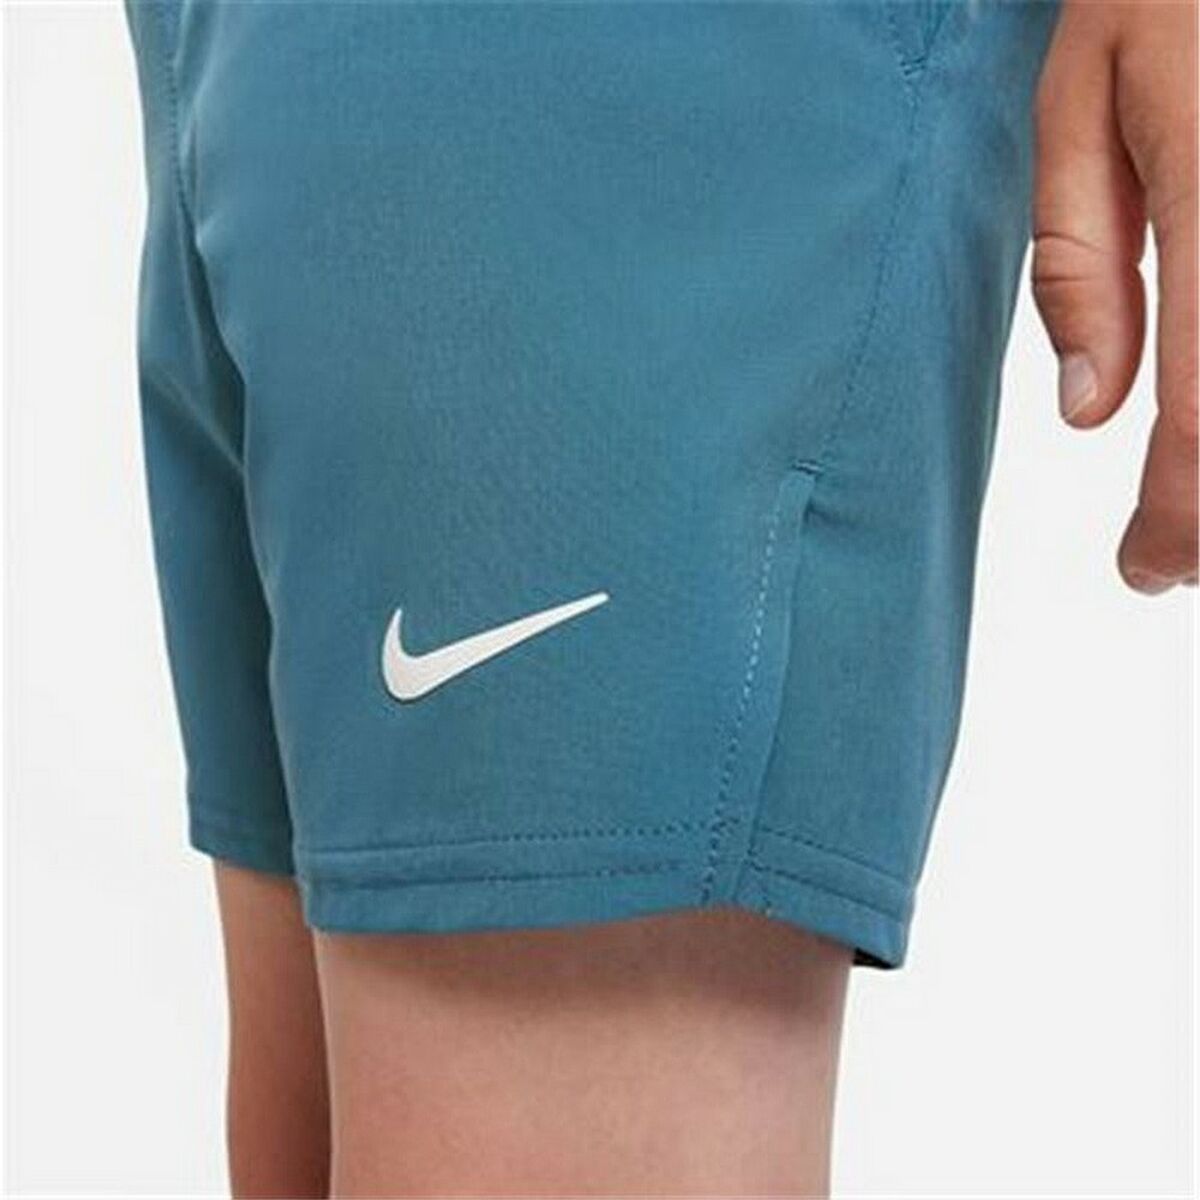 Sport Shorts for Kids Nike Flex Ace